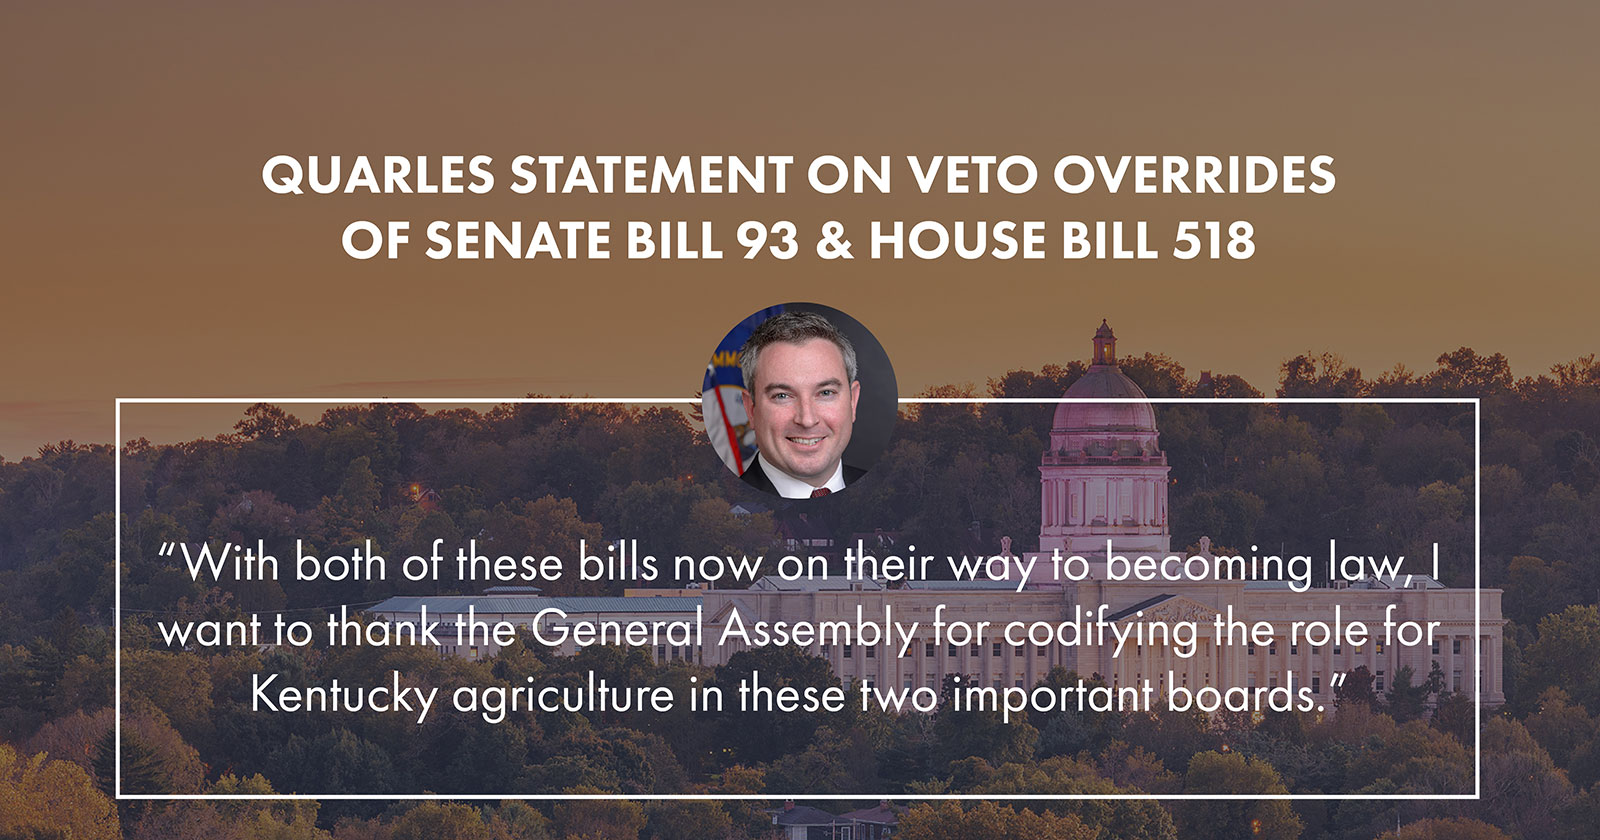 Quarles' statement on veto overrides